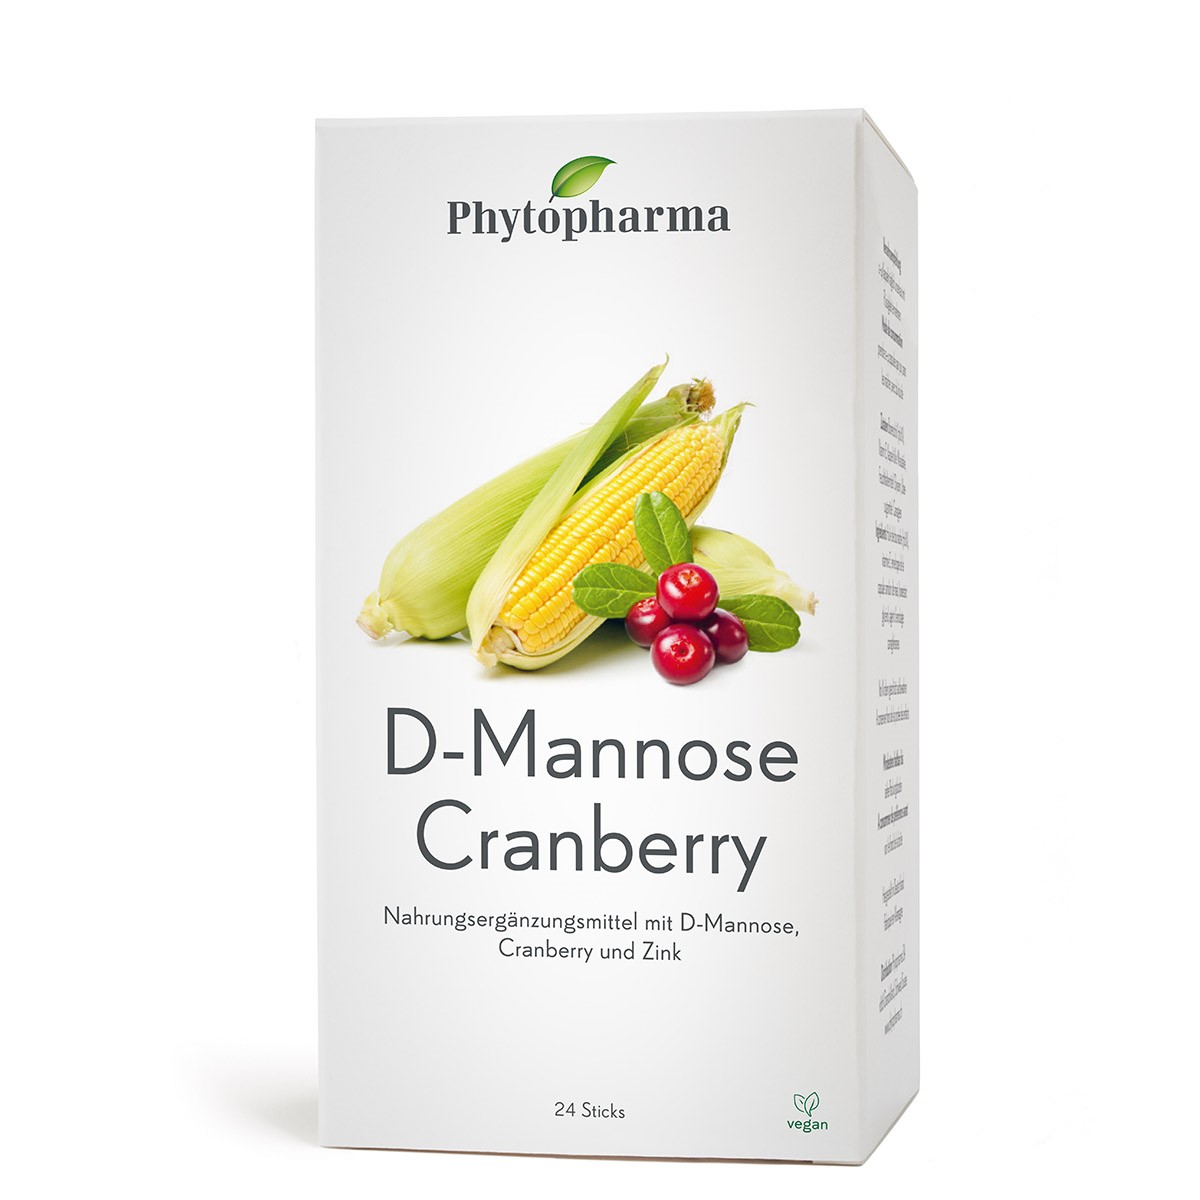 Phytopharma D-Mannose Cranberry Sticks 24 Stück